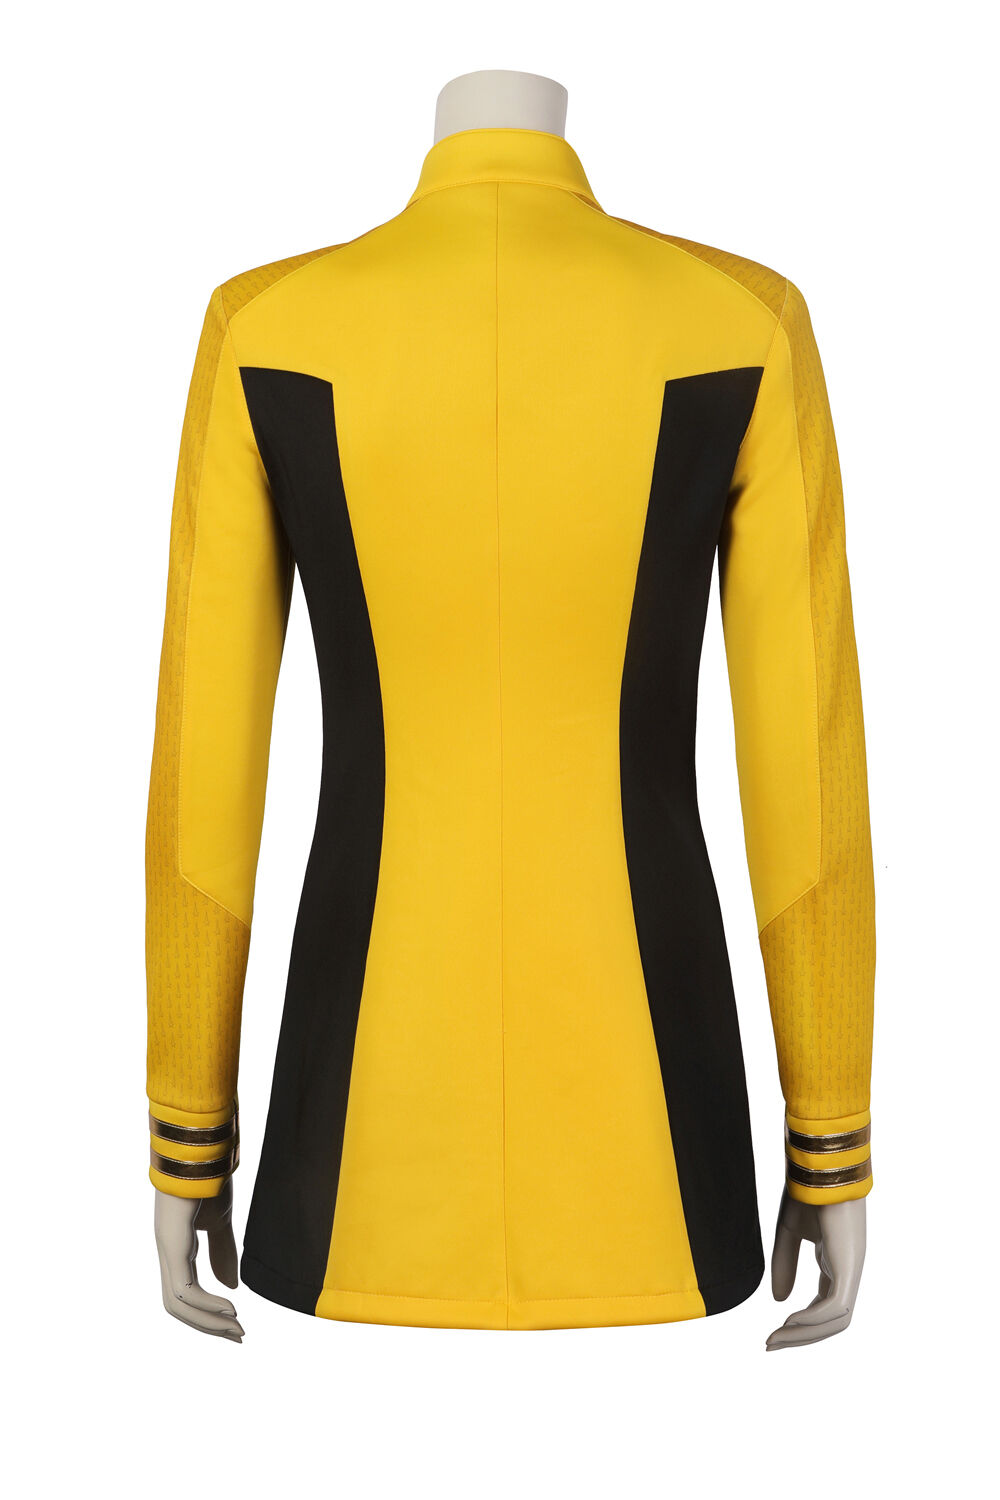 Star Trek Uniform Cosplay Costume High Quality – NalaGila